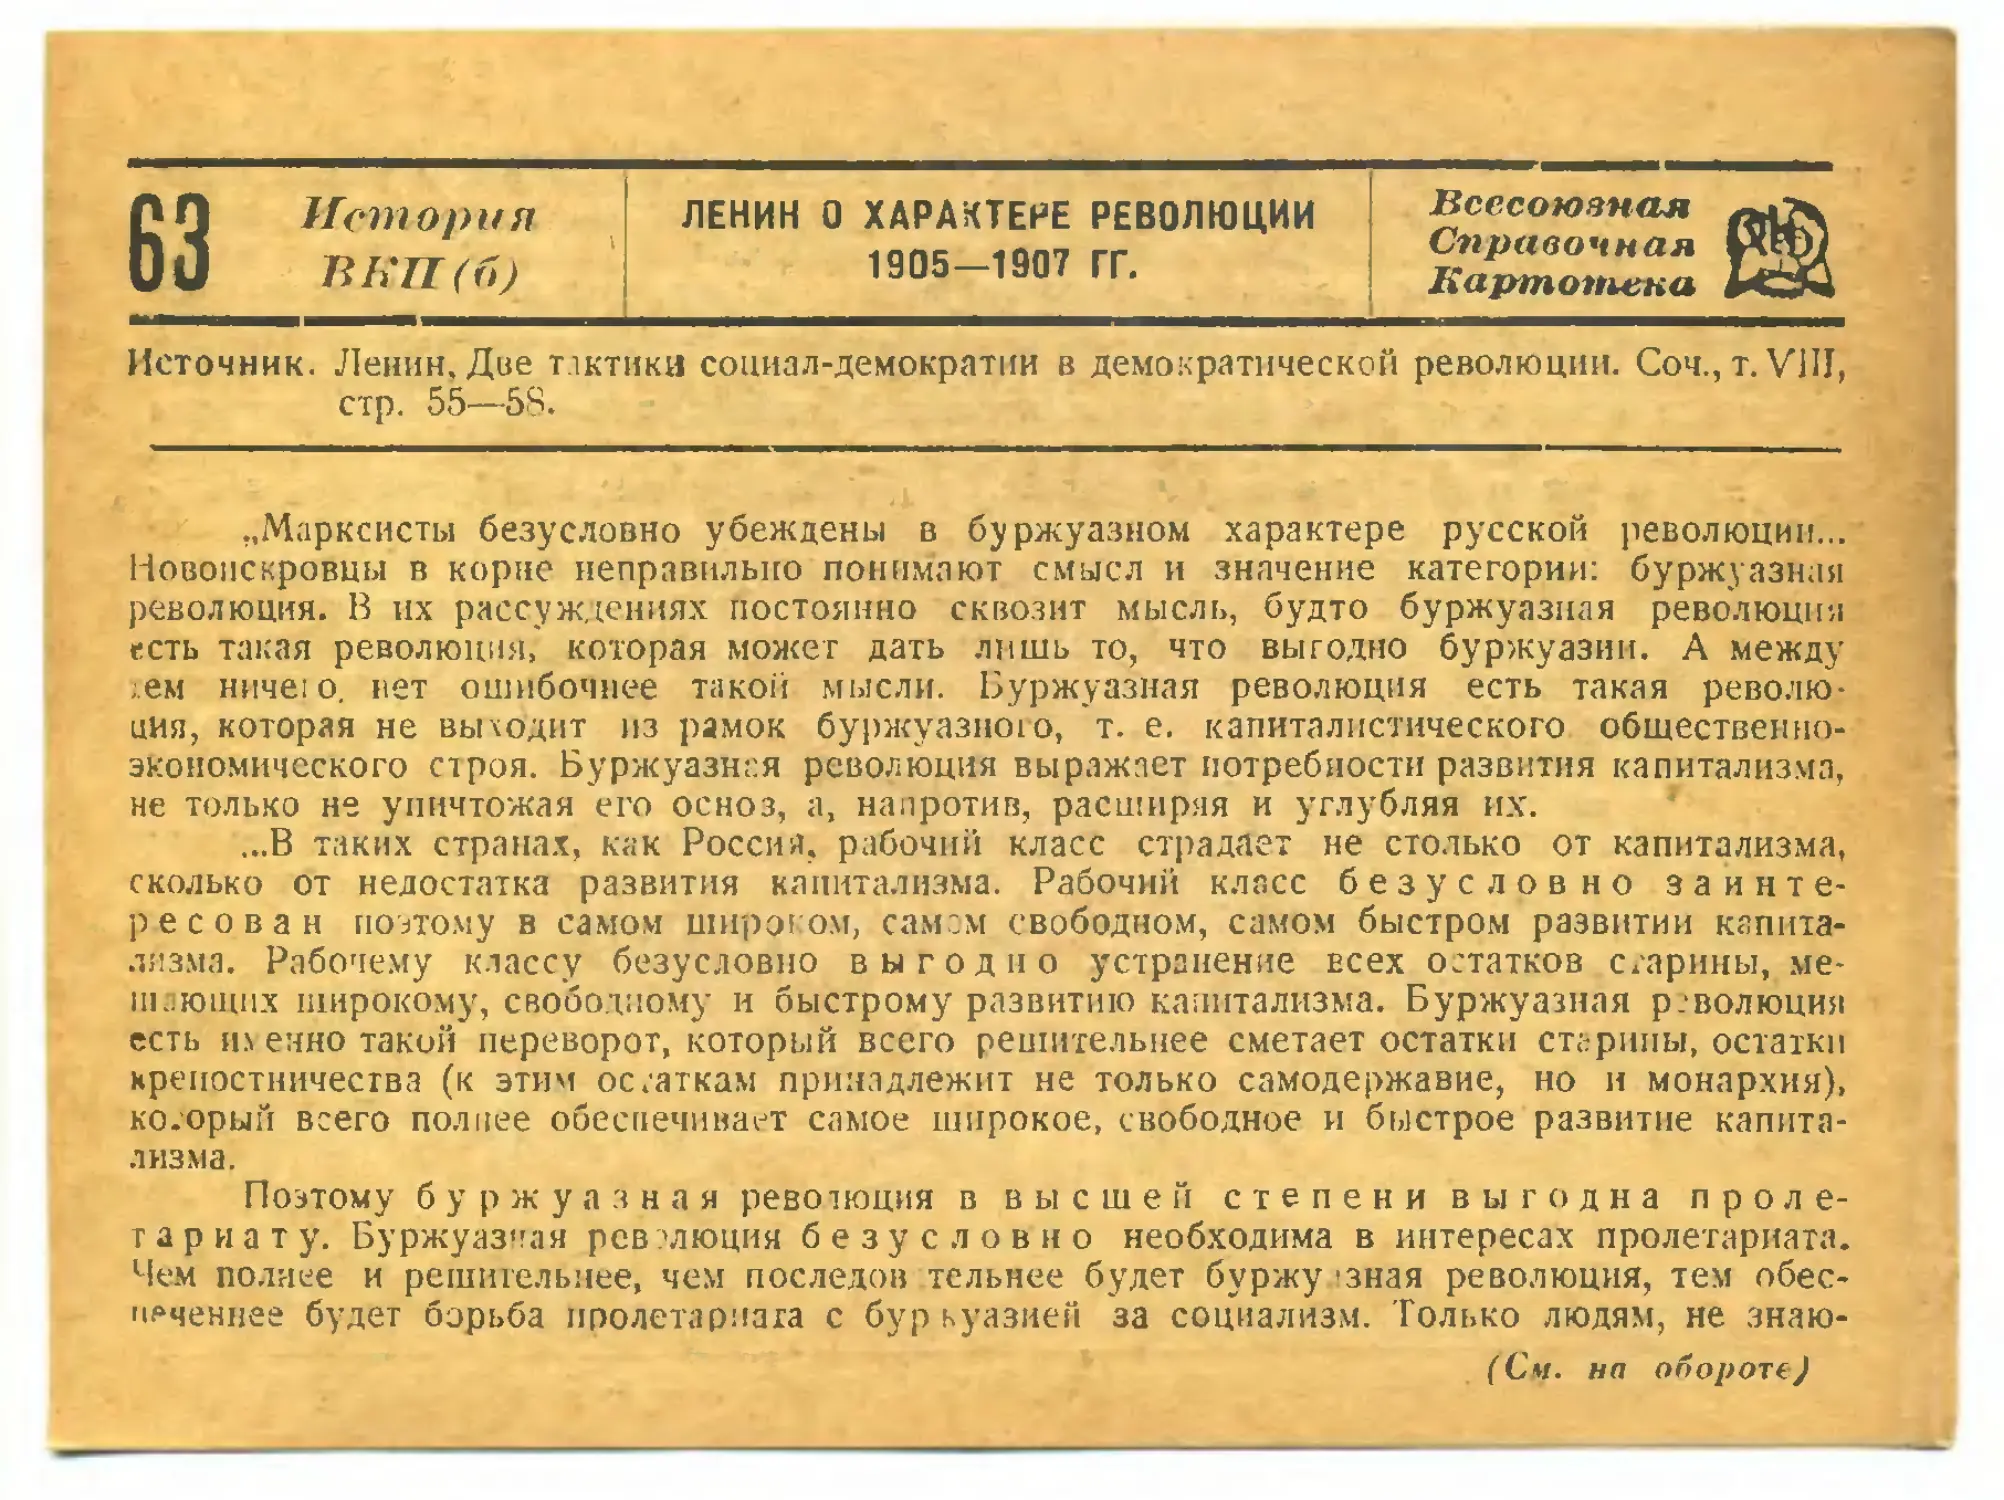 63. Ленин о характере революции 1905—1907 гг.